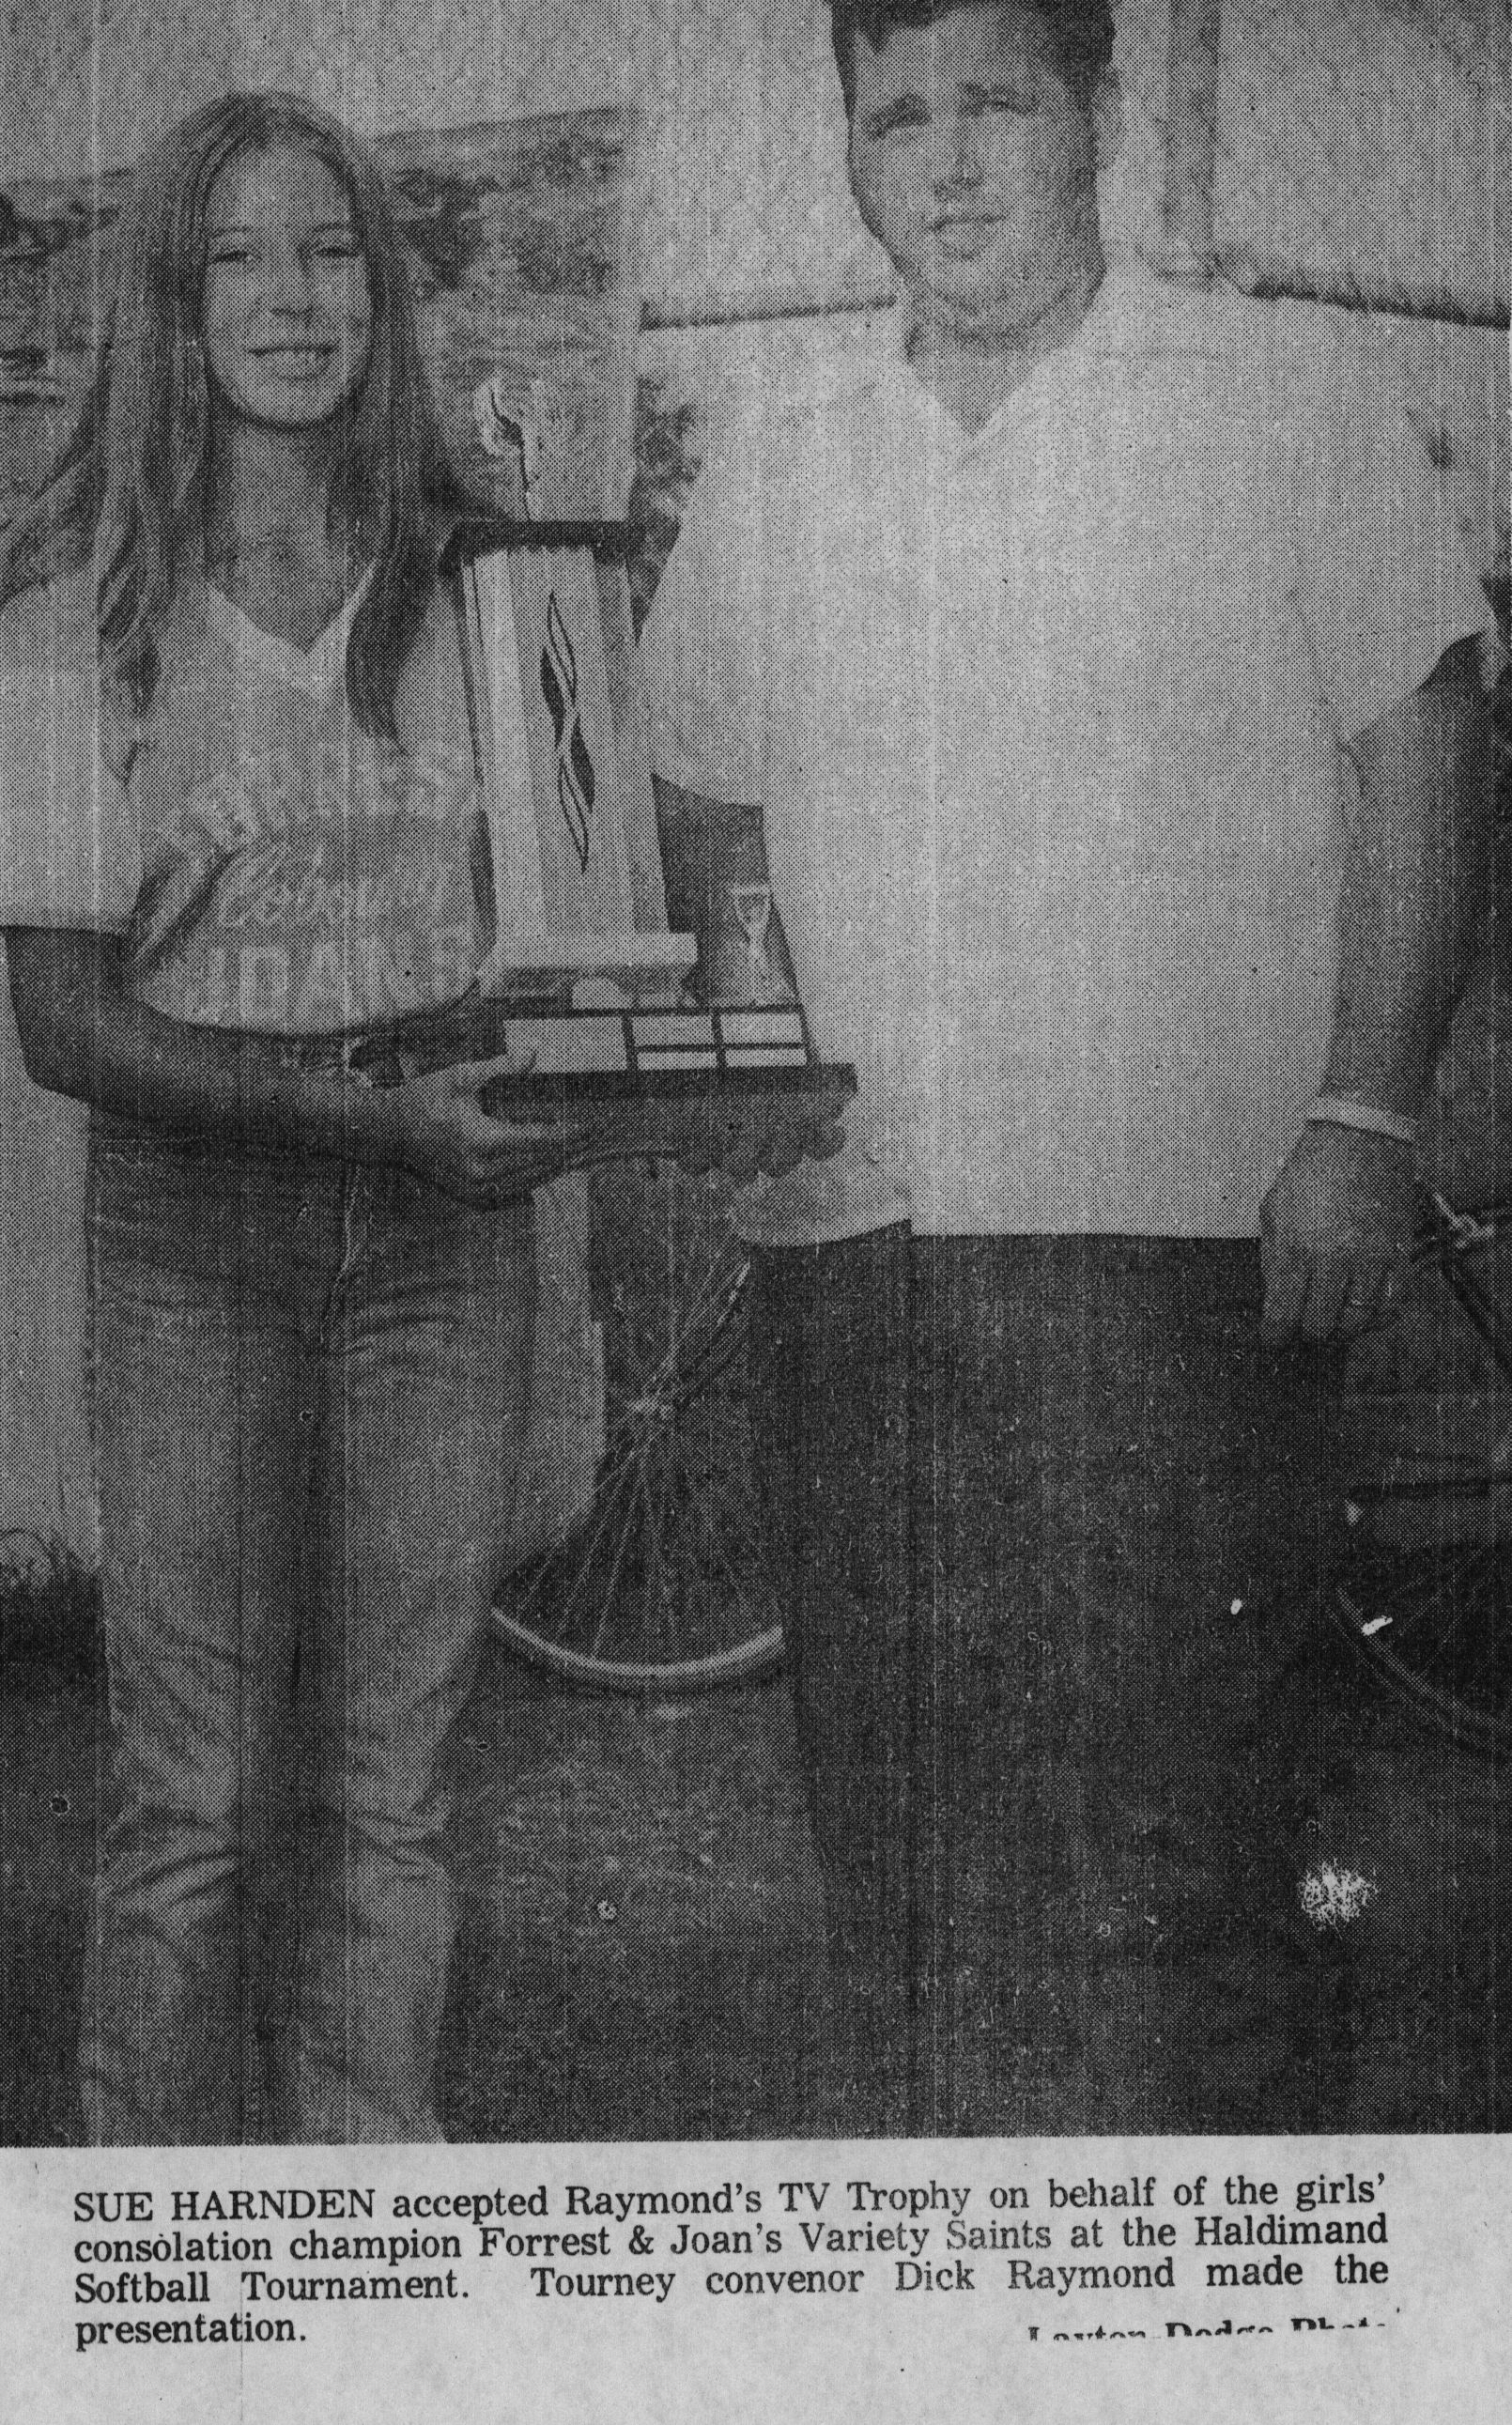 Softball -Grafton Tournament -1975 -Ladies-Cons Champs-F and J Variety